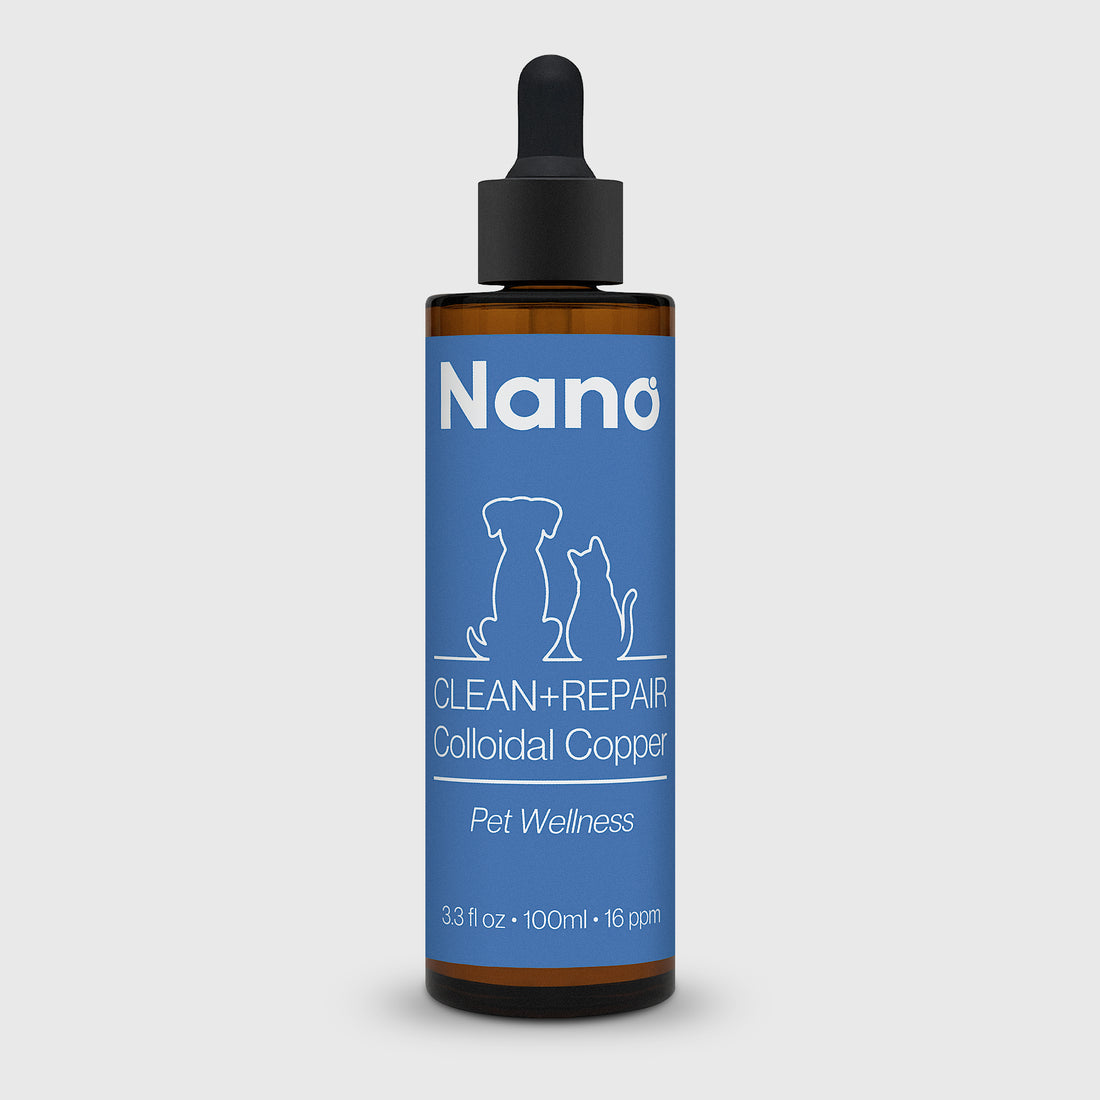 100ml bottle of 16 ppm Nano clean and repair colloidal copper pet wellness supplement